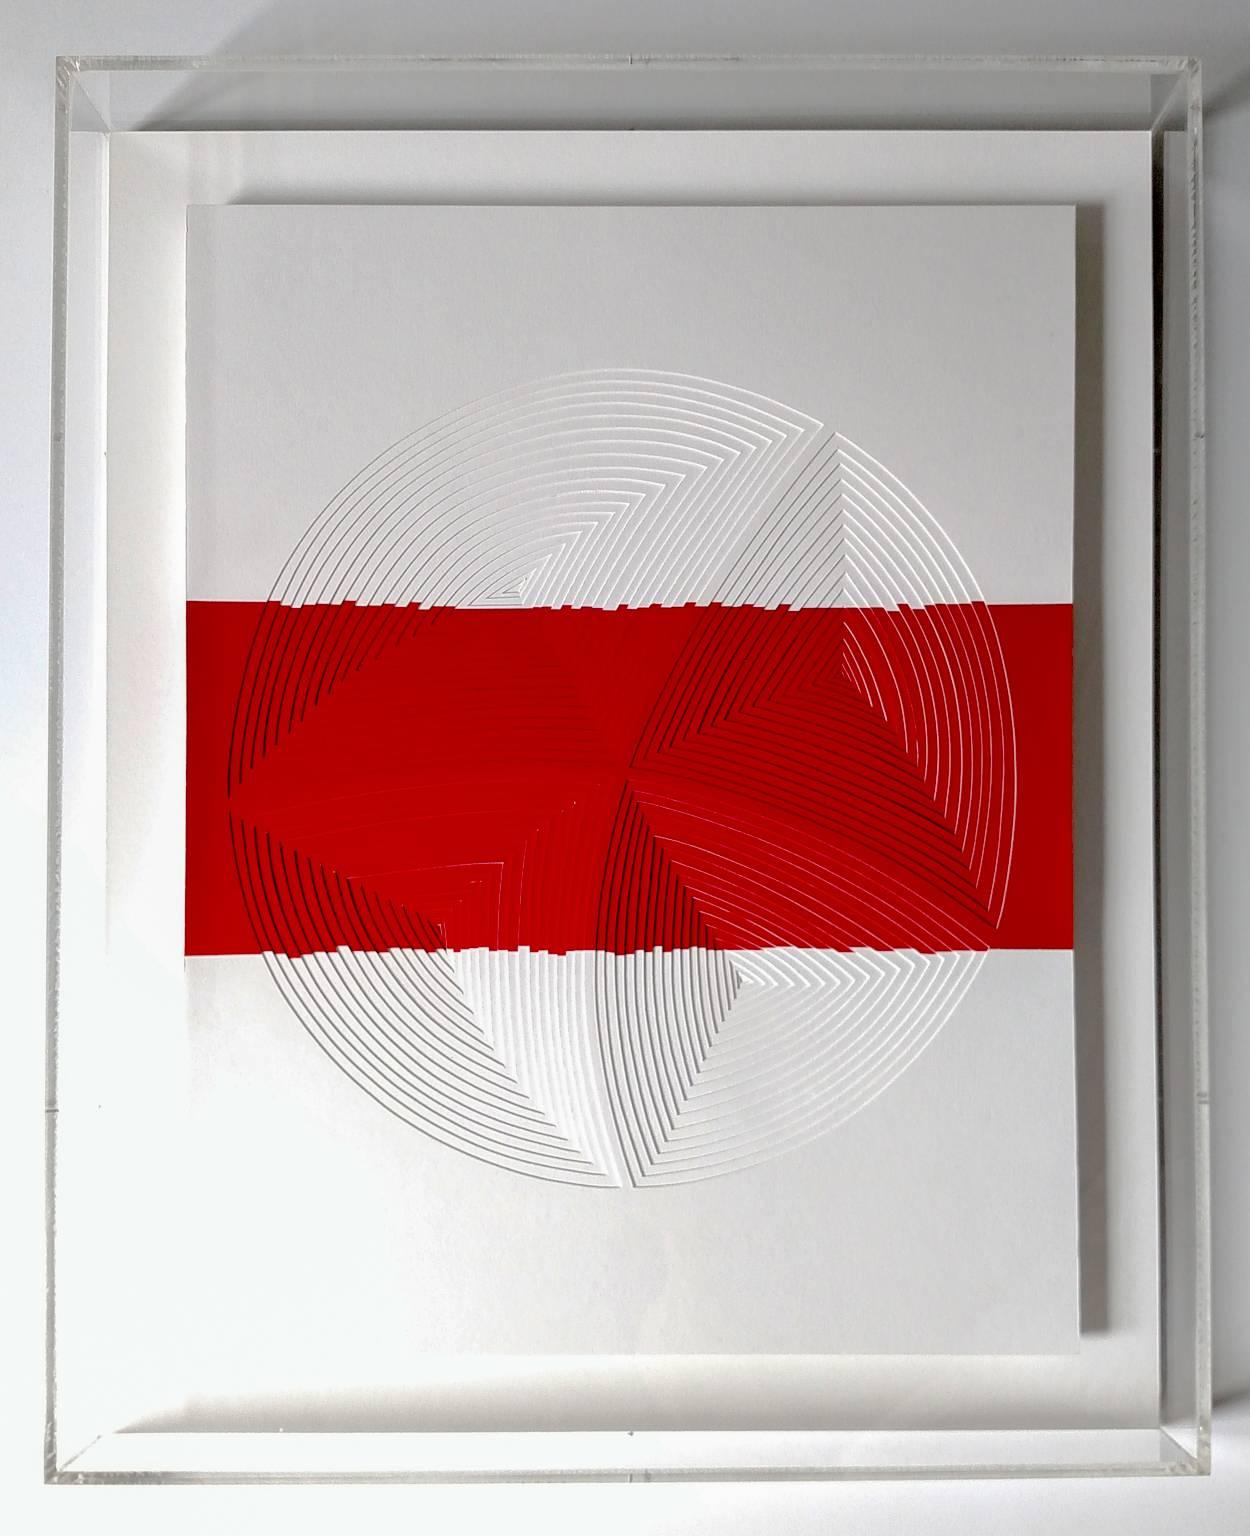 Cut w/ Surgical Scalpel on 2 ply Museum Board: 'Red & White Stripe Circle-In' - Mixed Media Art by Elizabeth Gregory-Gruen